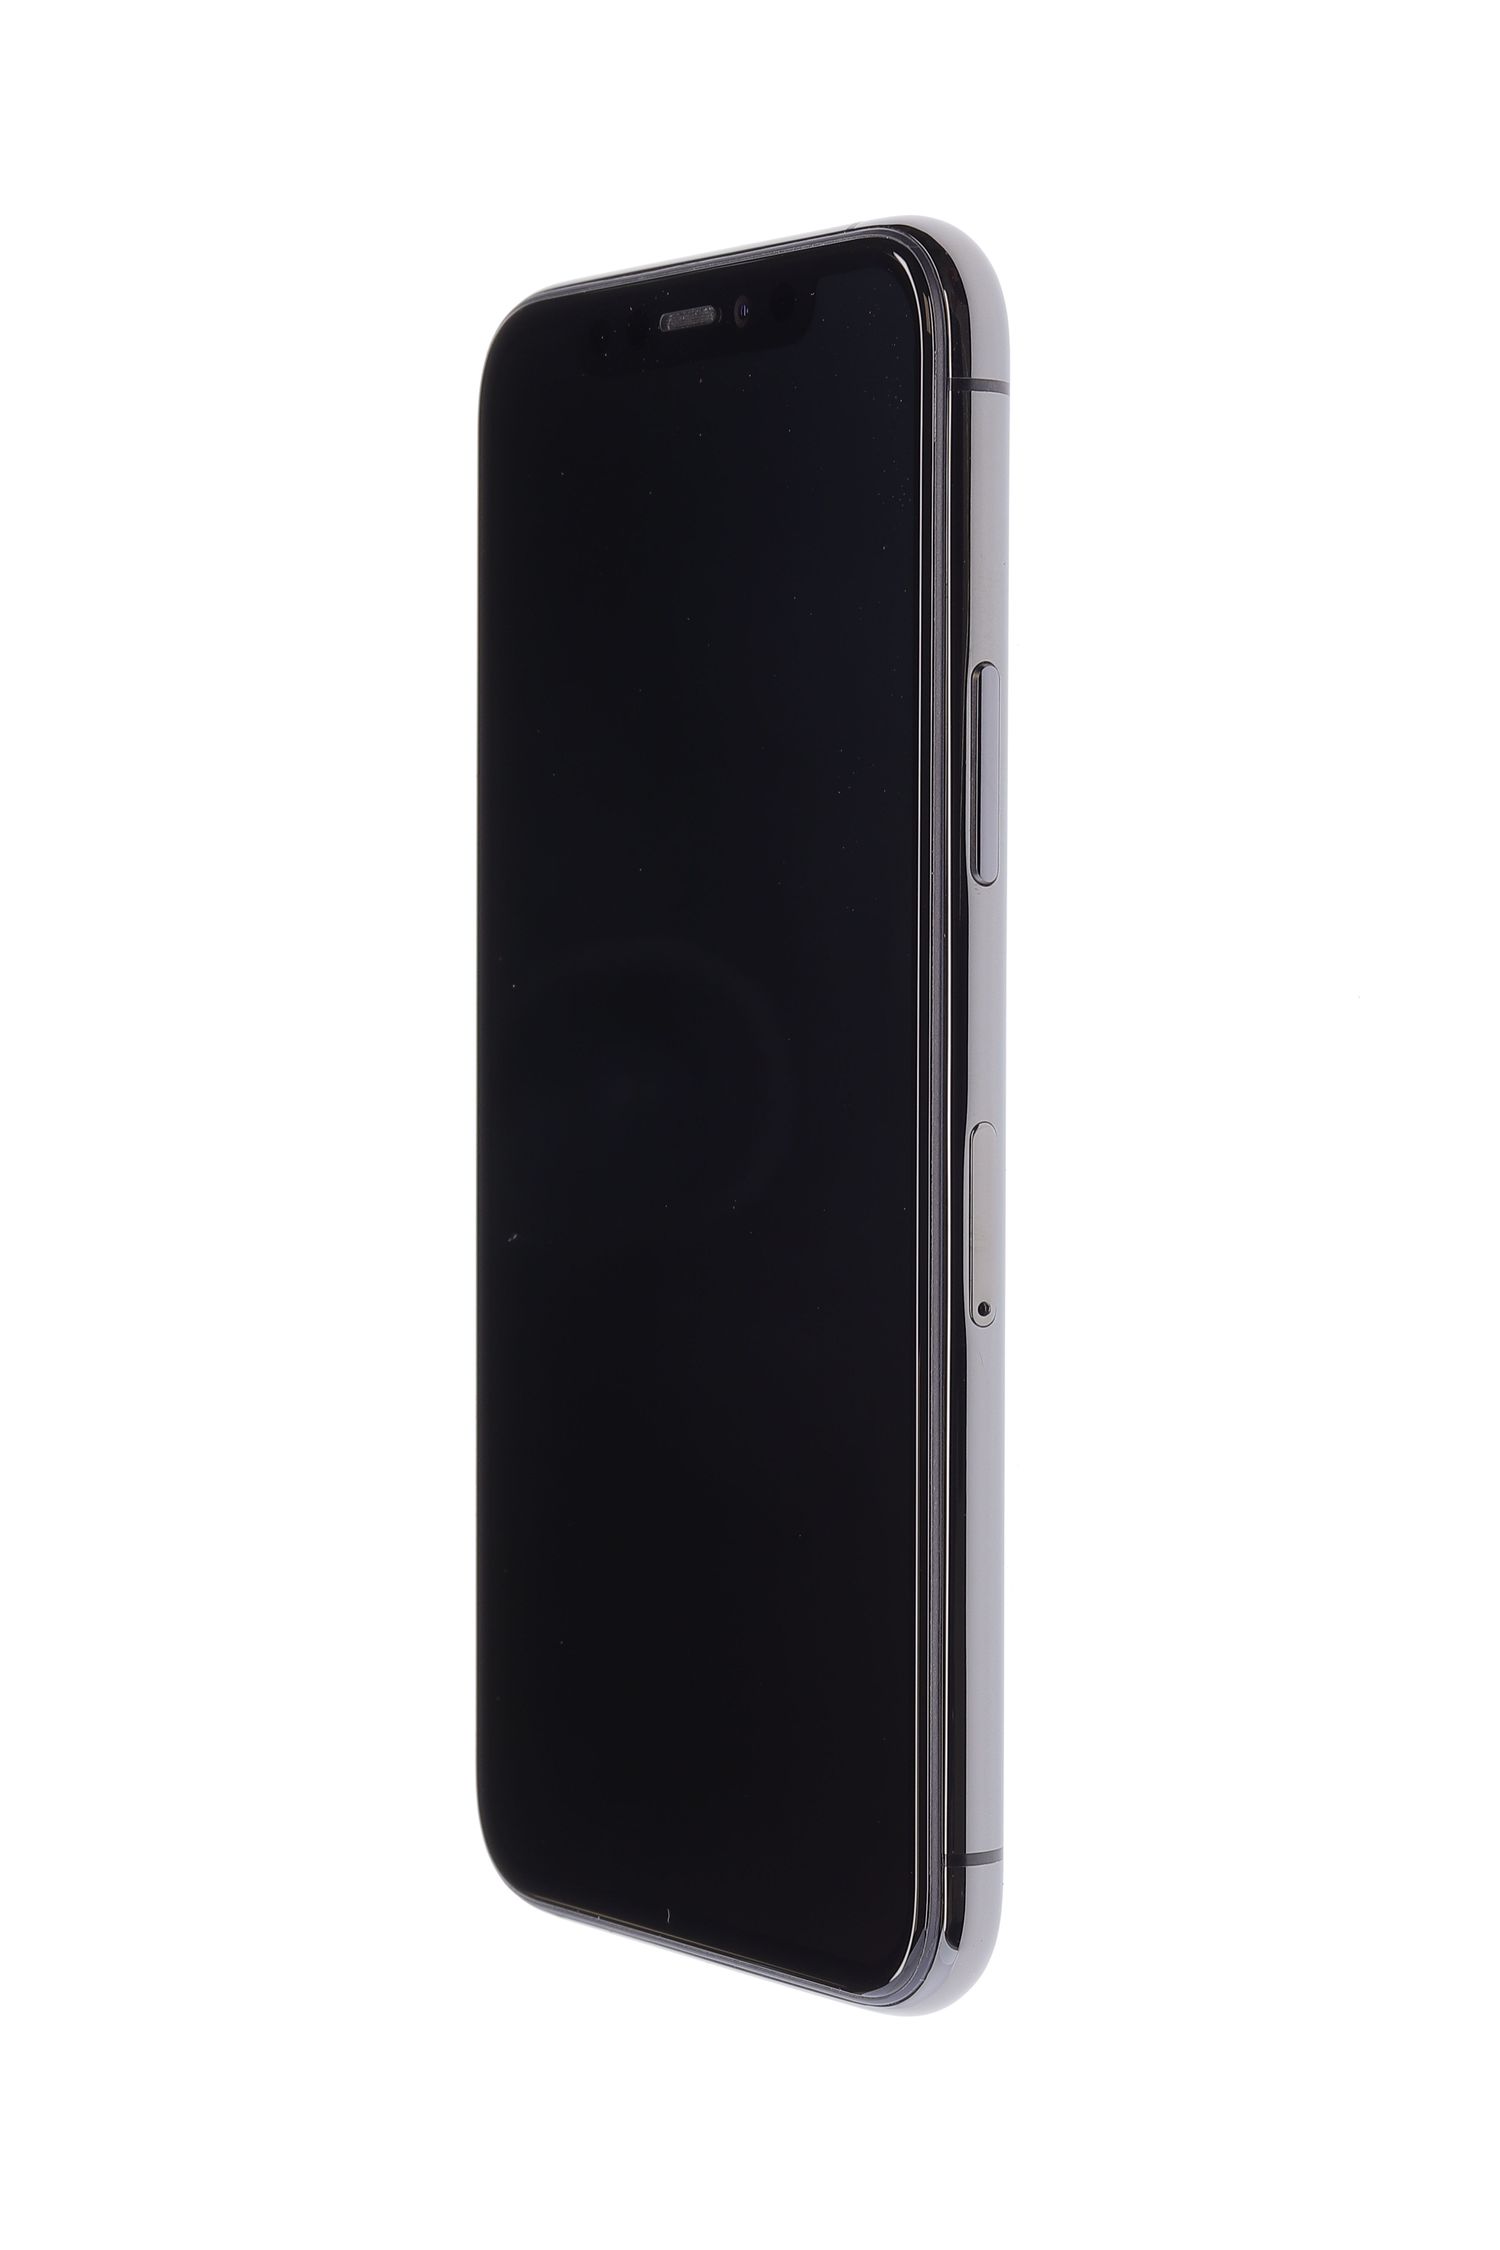 Mobiltelefon Apple iPhone 11 Pro, Space Gray, 256 GB, Excelent